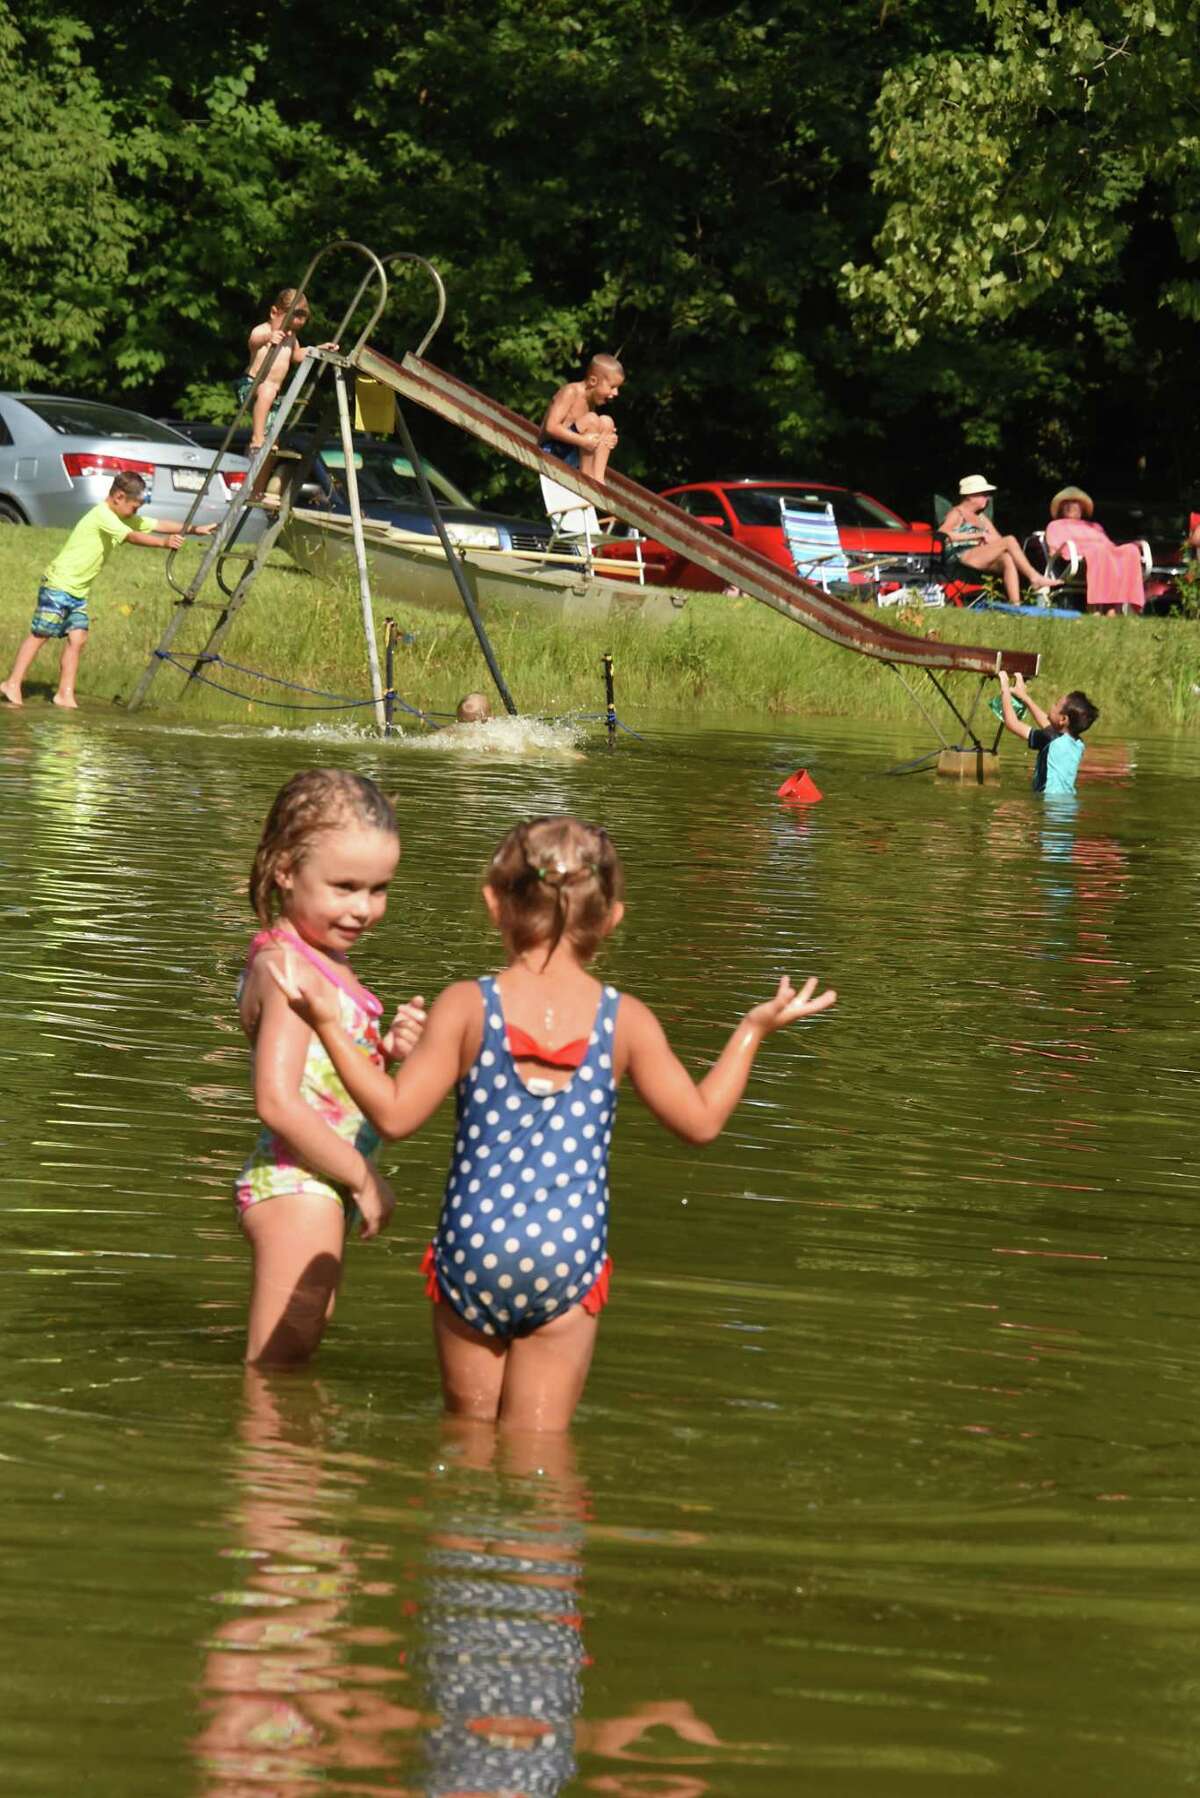 Kids swim at Little Troy Park on Wednesday, Aug. 29, 2018 in Charlton, N.Y. (Lori Van Buren/Times Union)